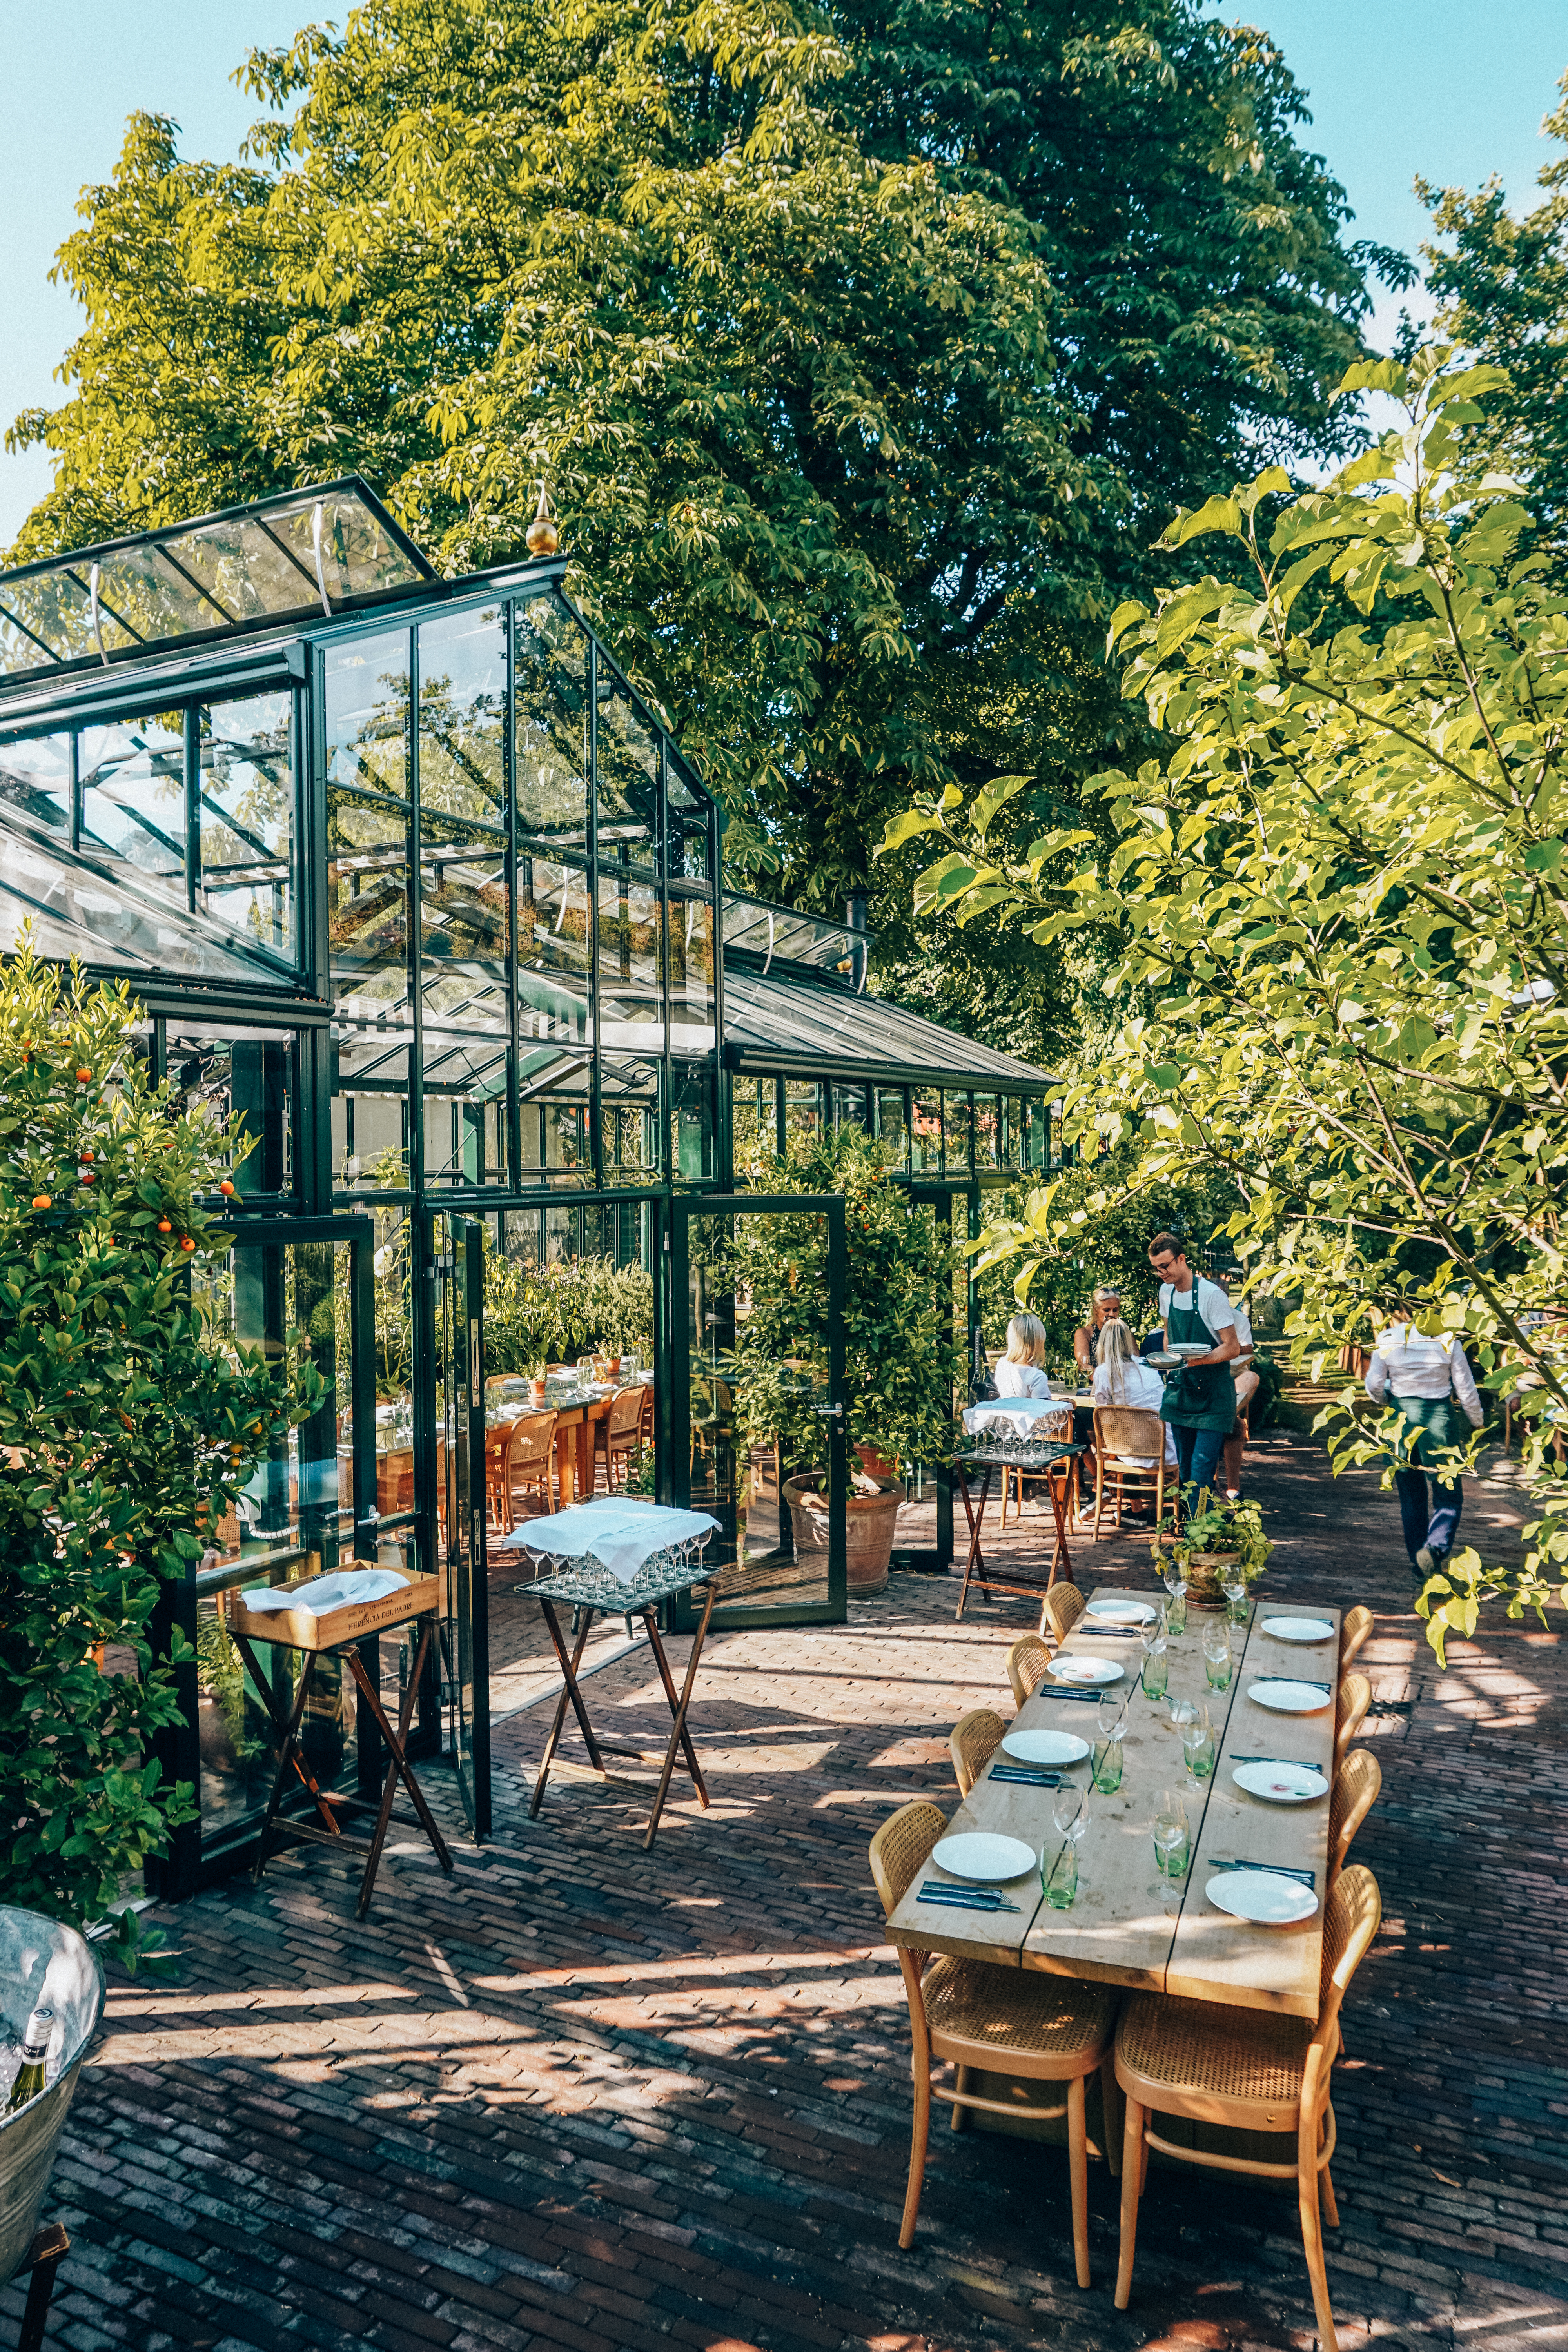 A stunning greenhourse restaurant and patio inside Copenhagen's iconic Tivoli Gardens